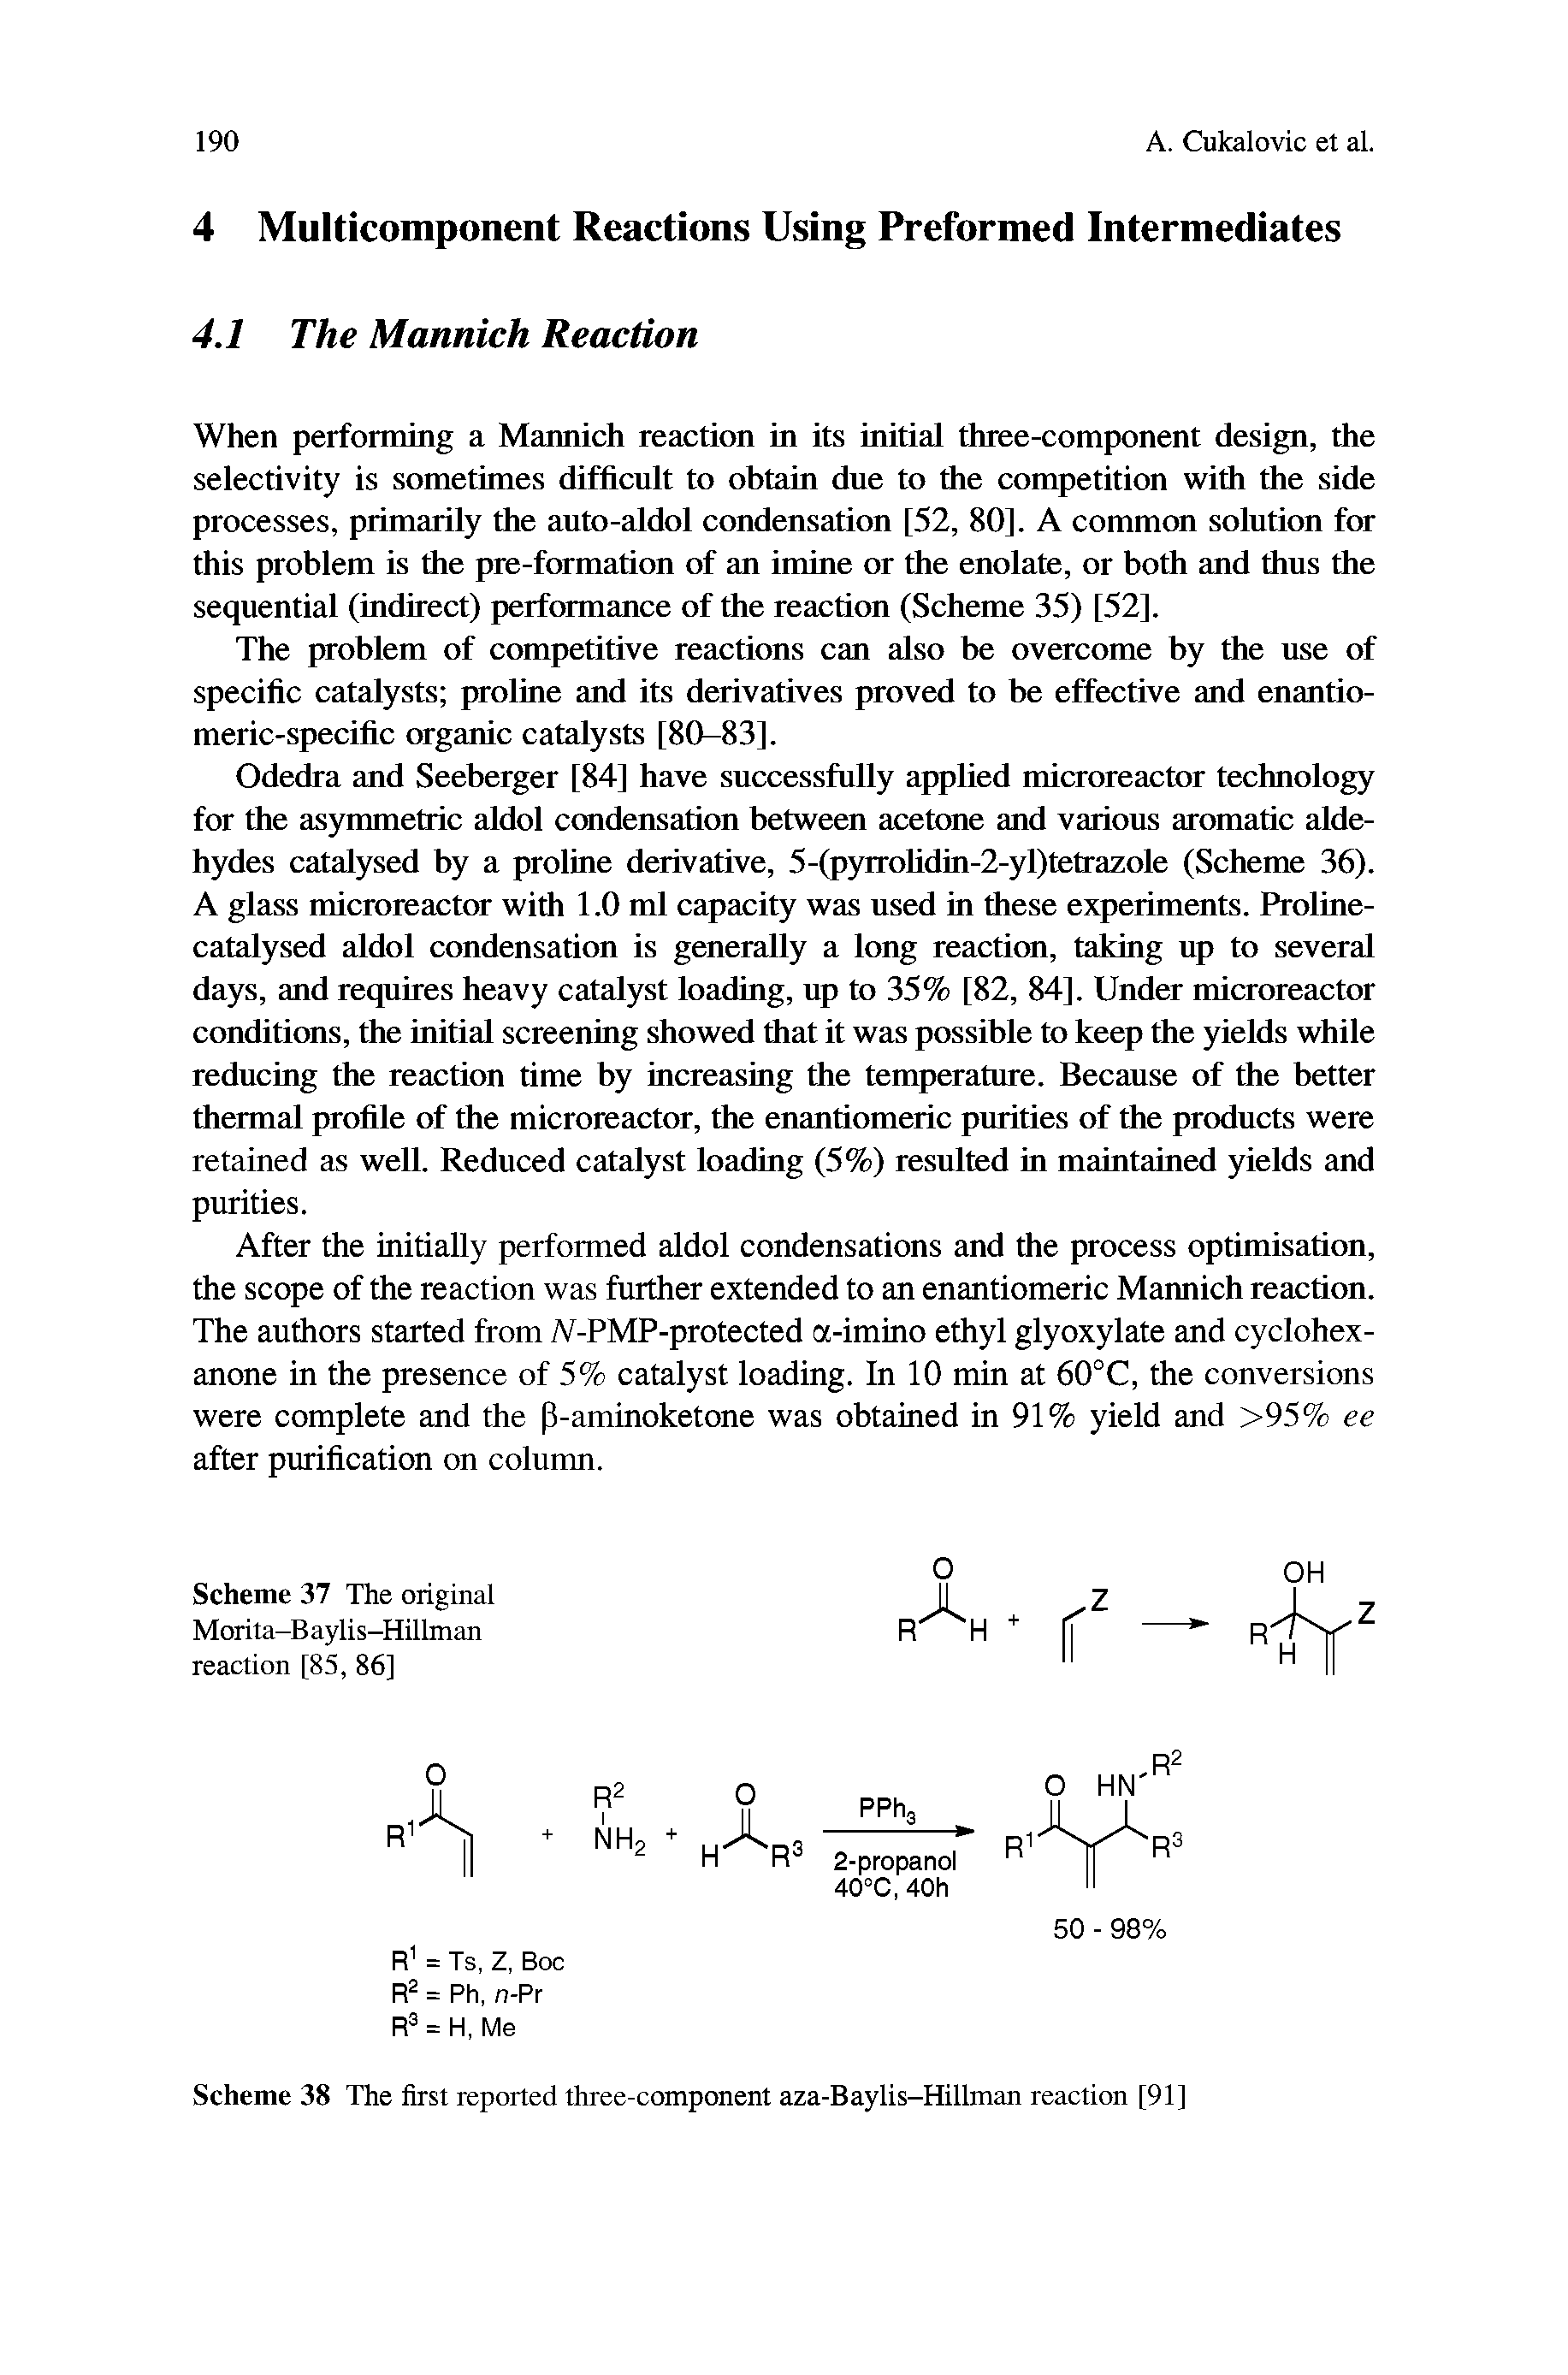 Scheme 37 The original Morita-Baylis-Hillman reaction [85, 86]...